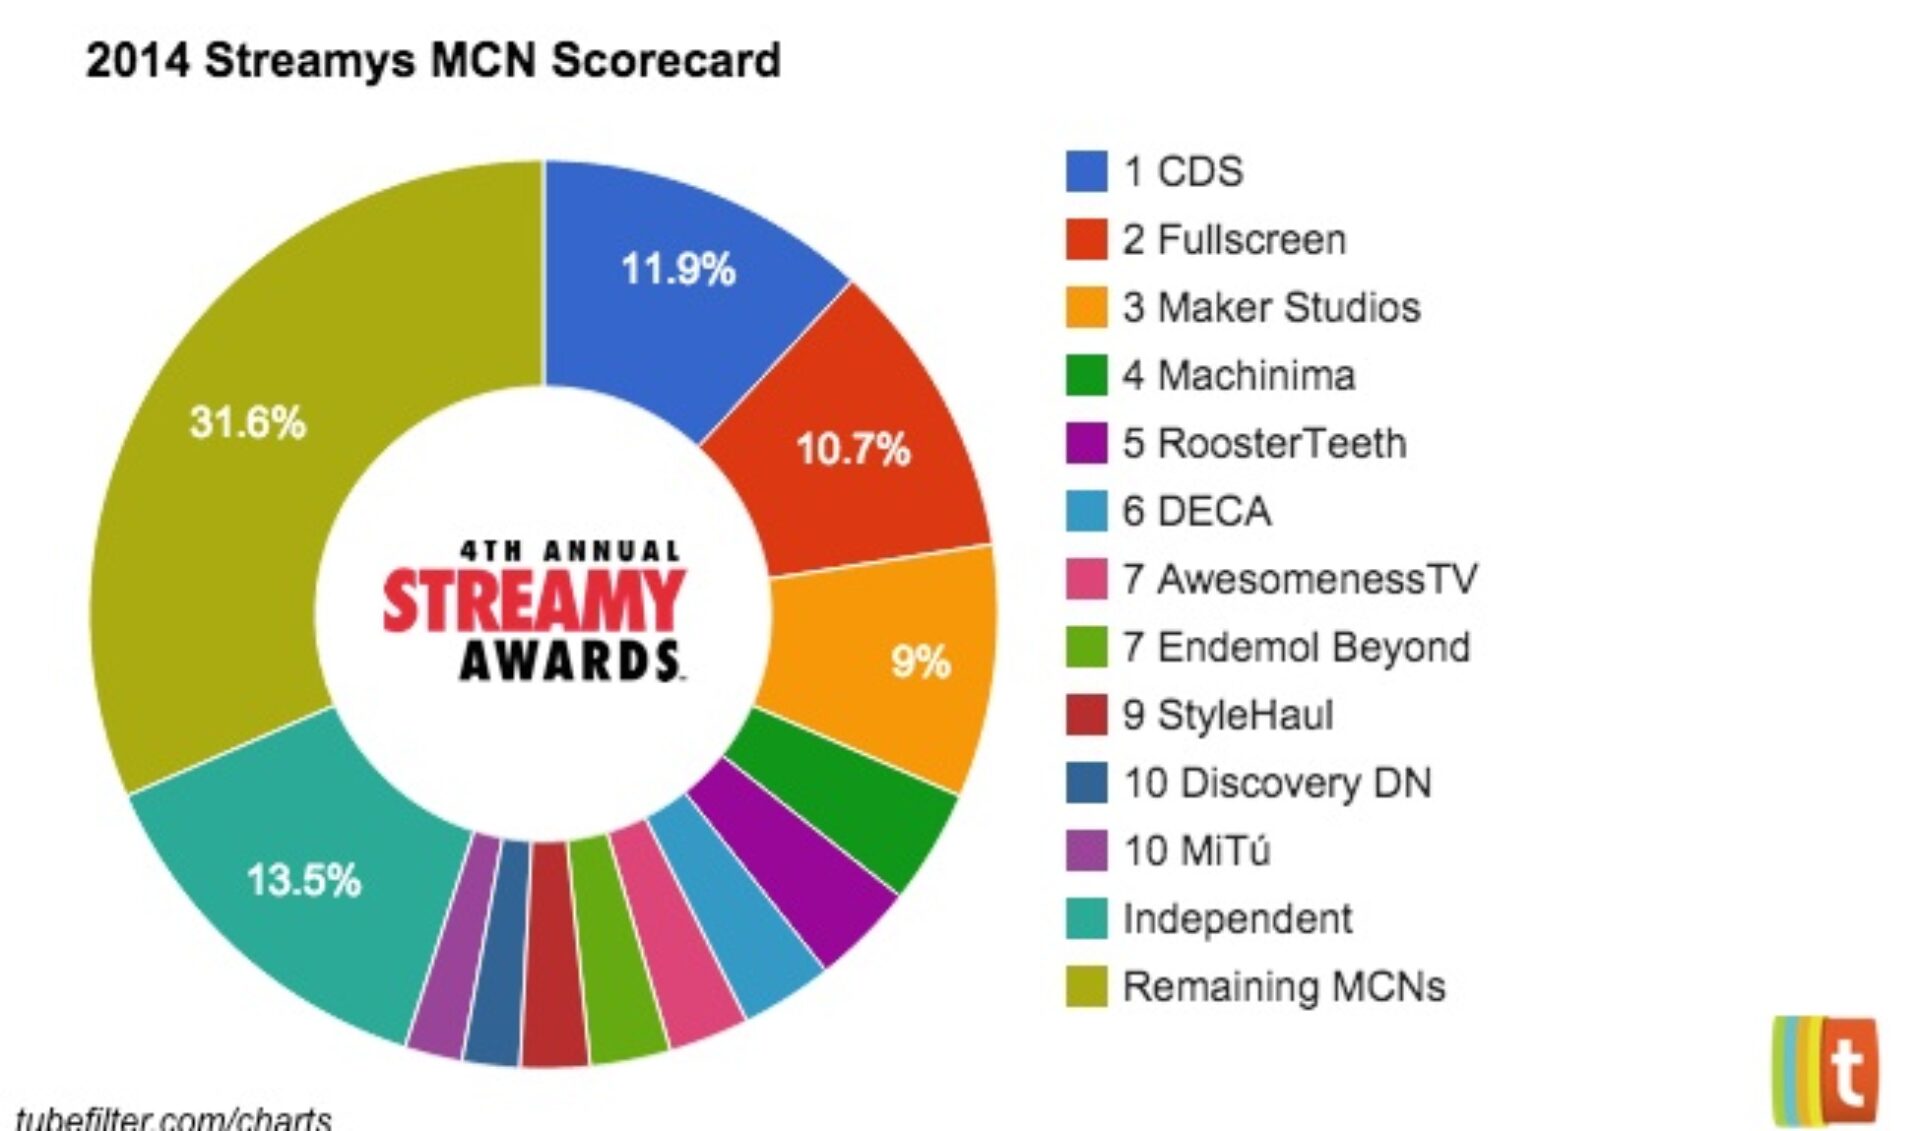 Streamys MCN Scorecard: CDS, Fullscreen, And Maker Studios Lead Nominations [ANALYSIS]